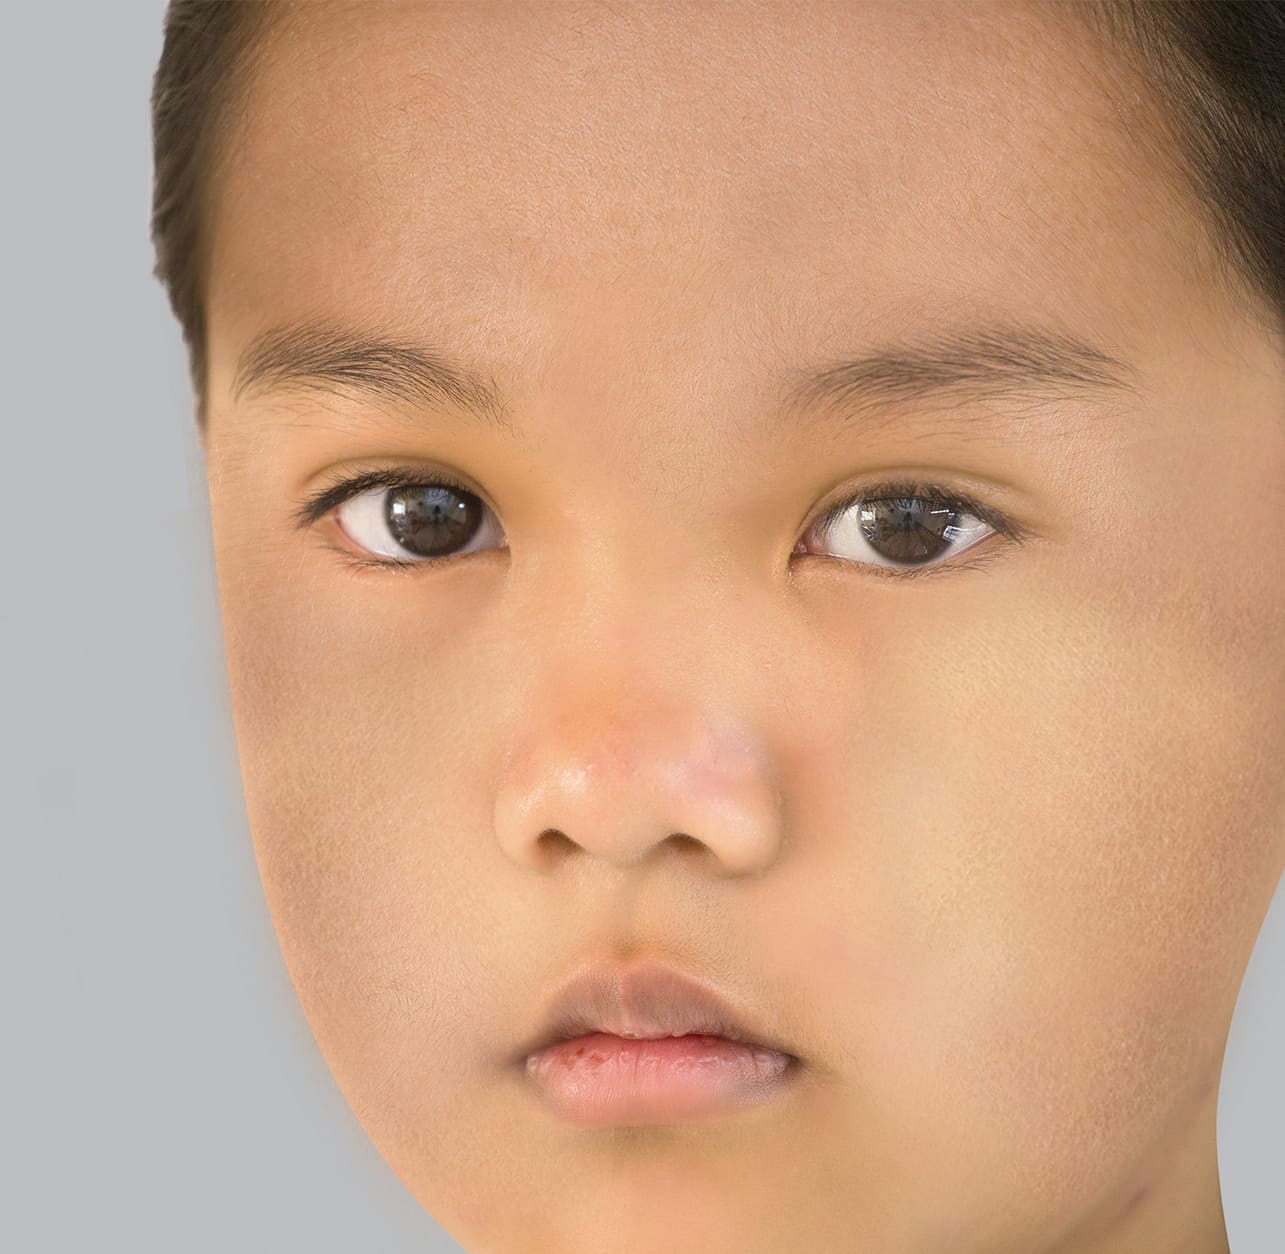 Child / Asian